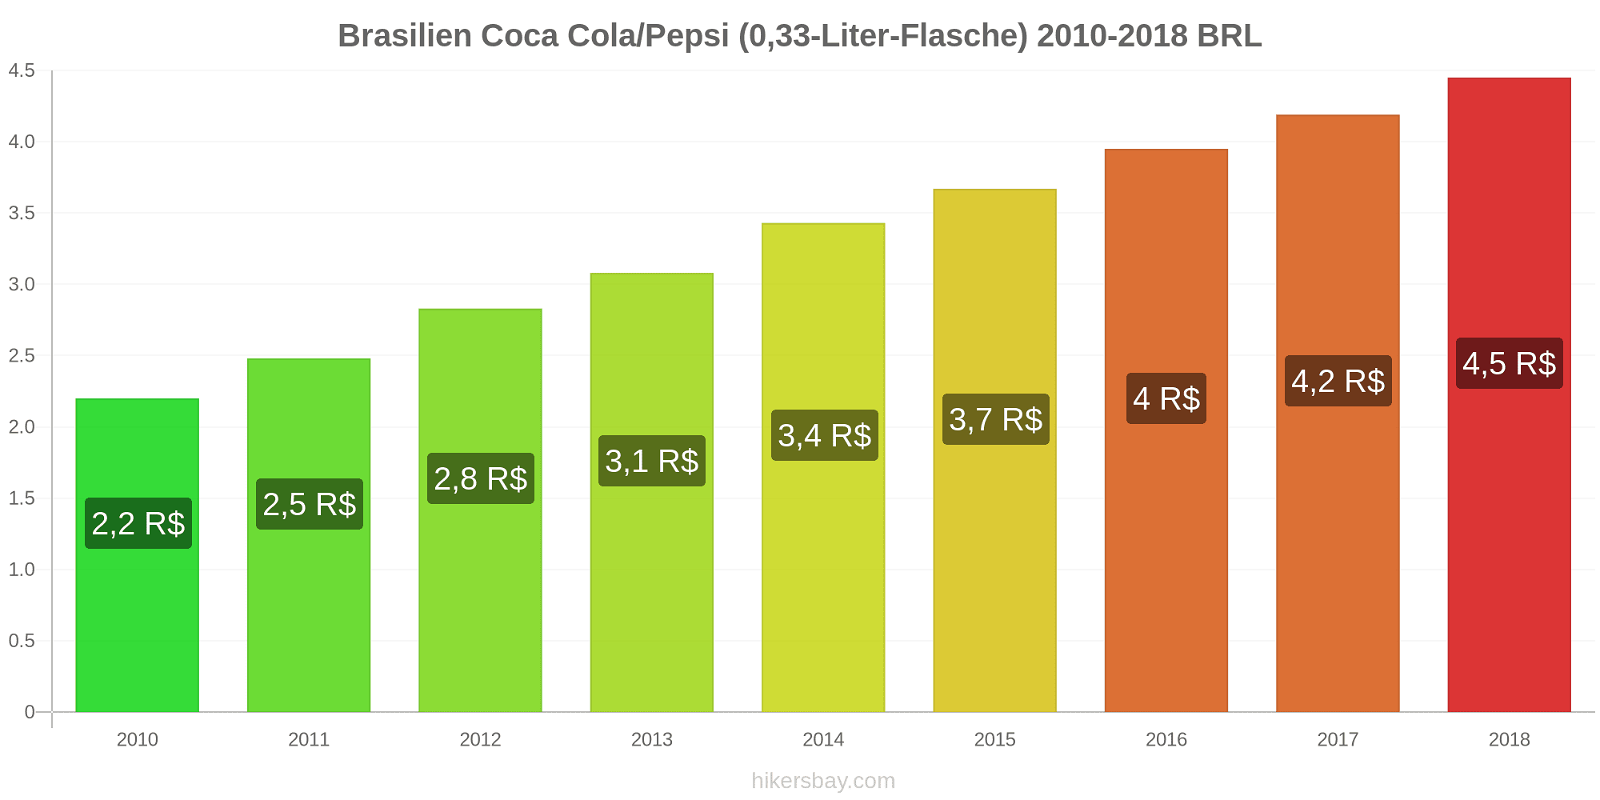 Brasilien Preisänderungen Coke/Pepsi (0,33-Liter-Flasche) hikersbay.com